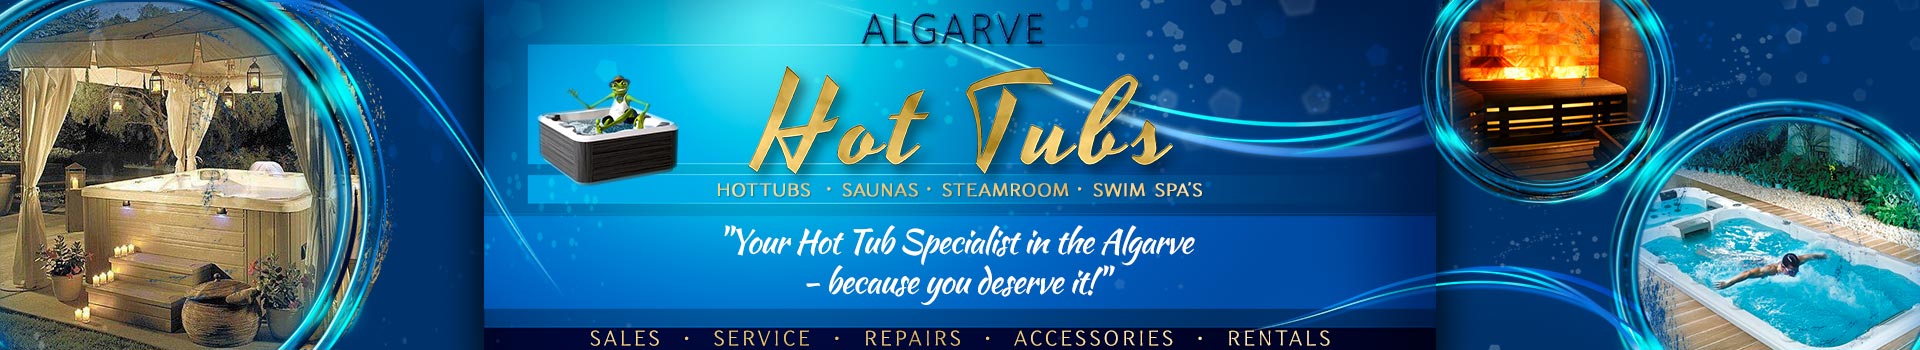 Wellness Dream Algarve Hot Tube, Saunas, Swim Spa's and Service